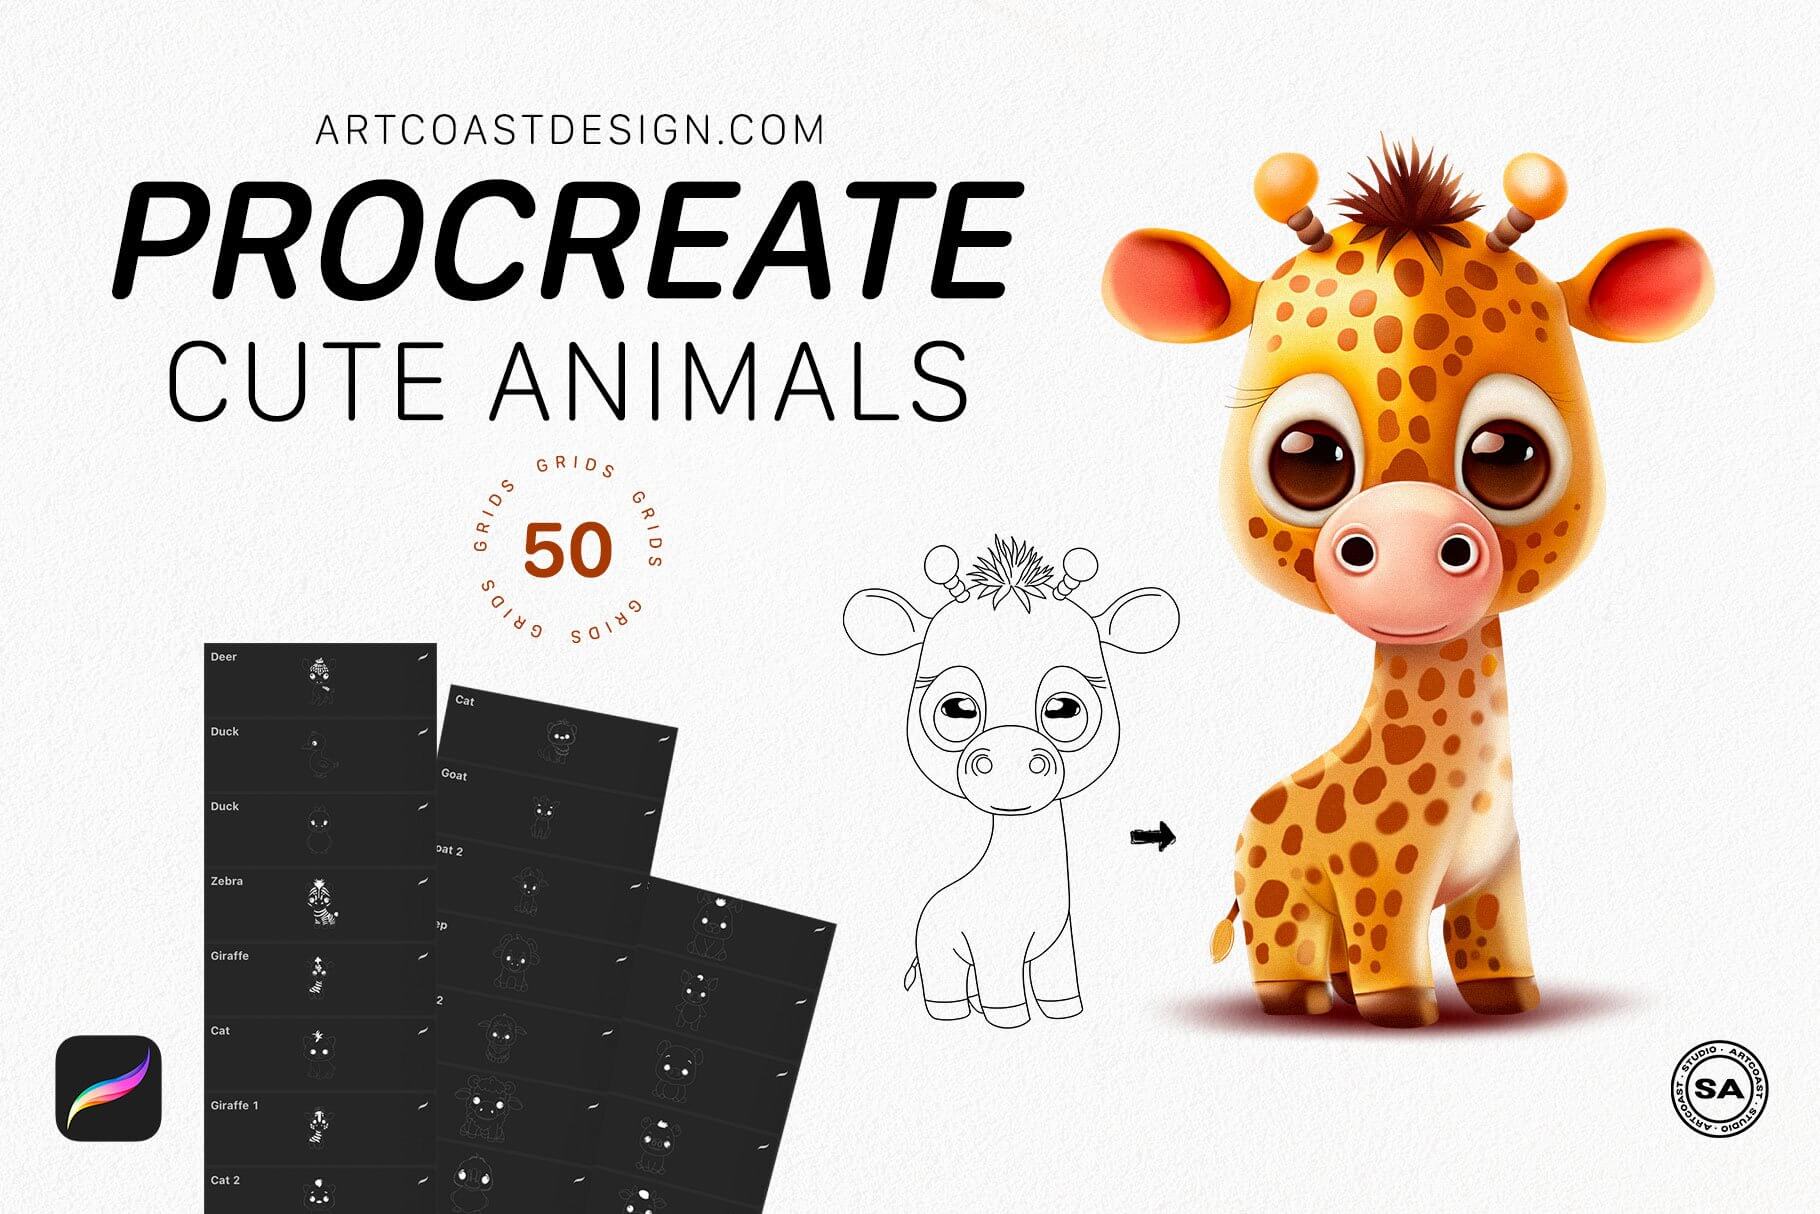 Animal Procreate Stamp, Character Creator (1703904)